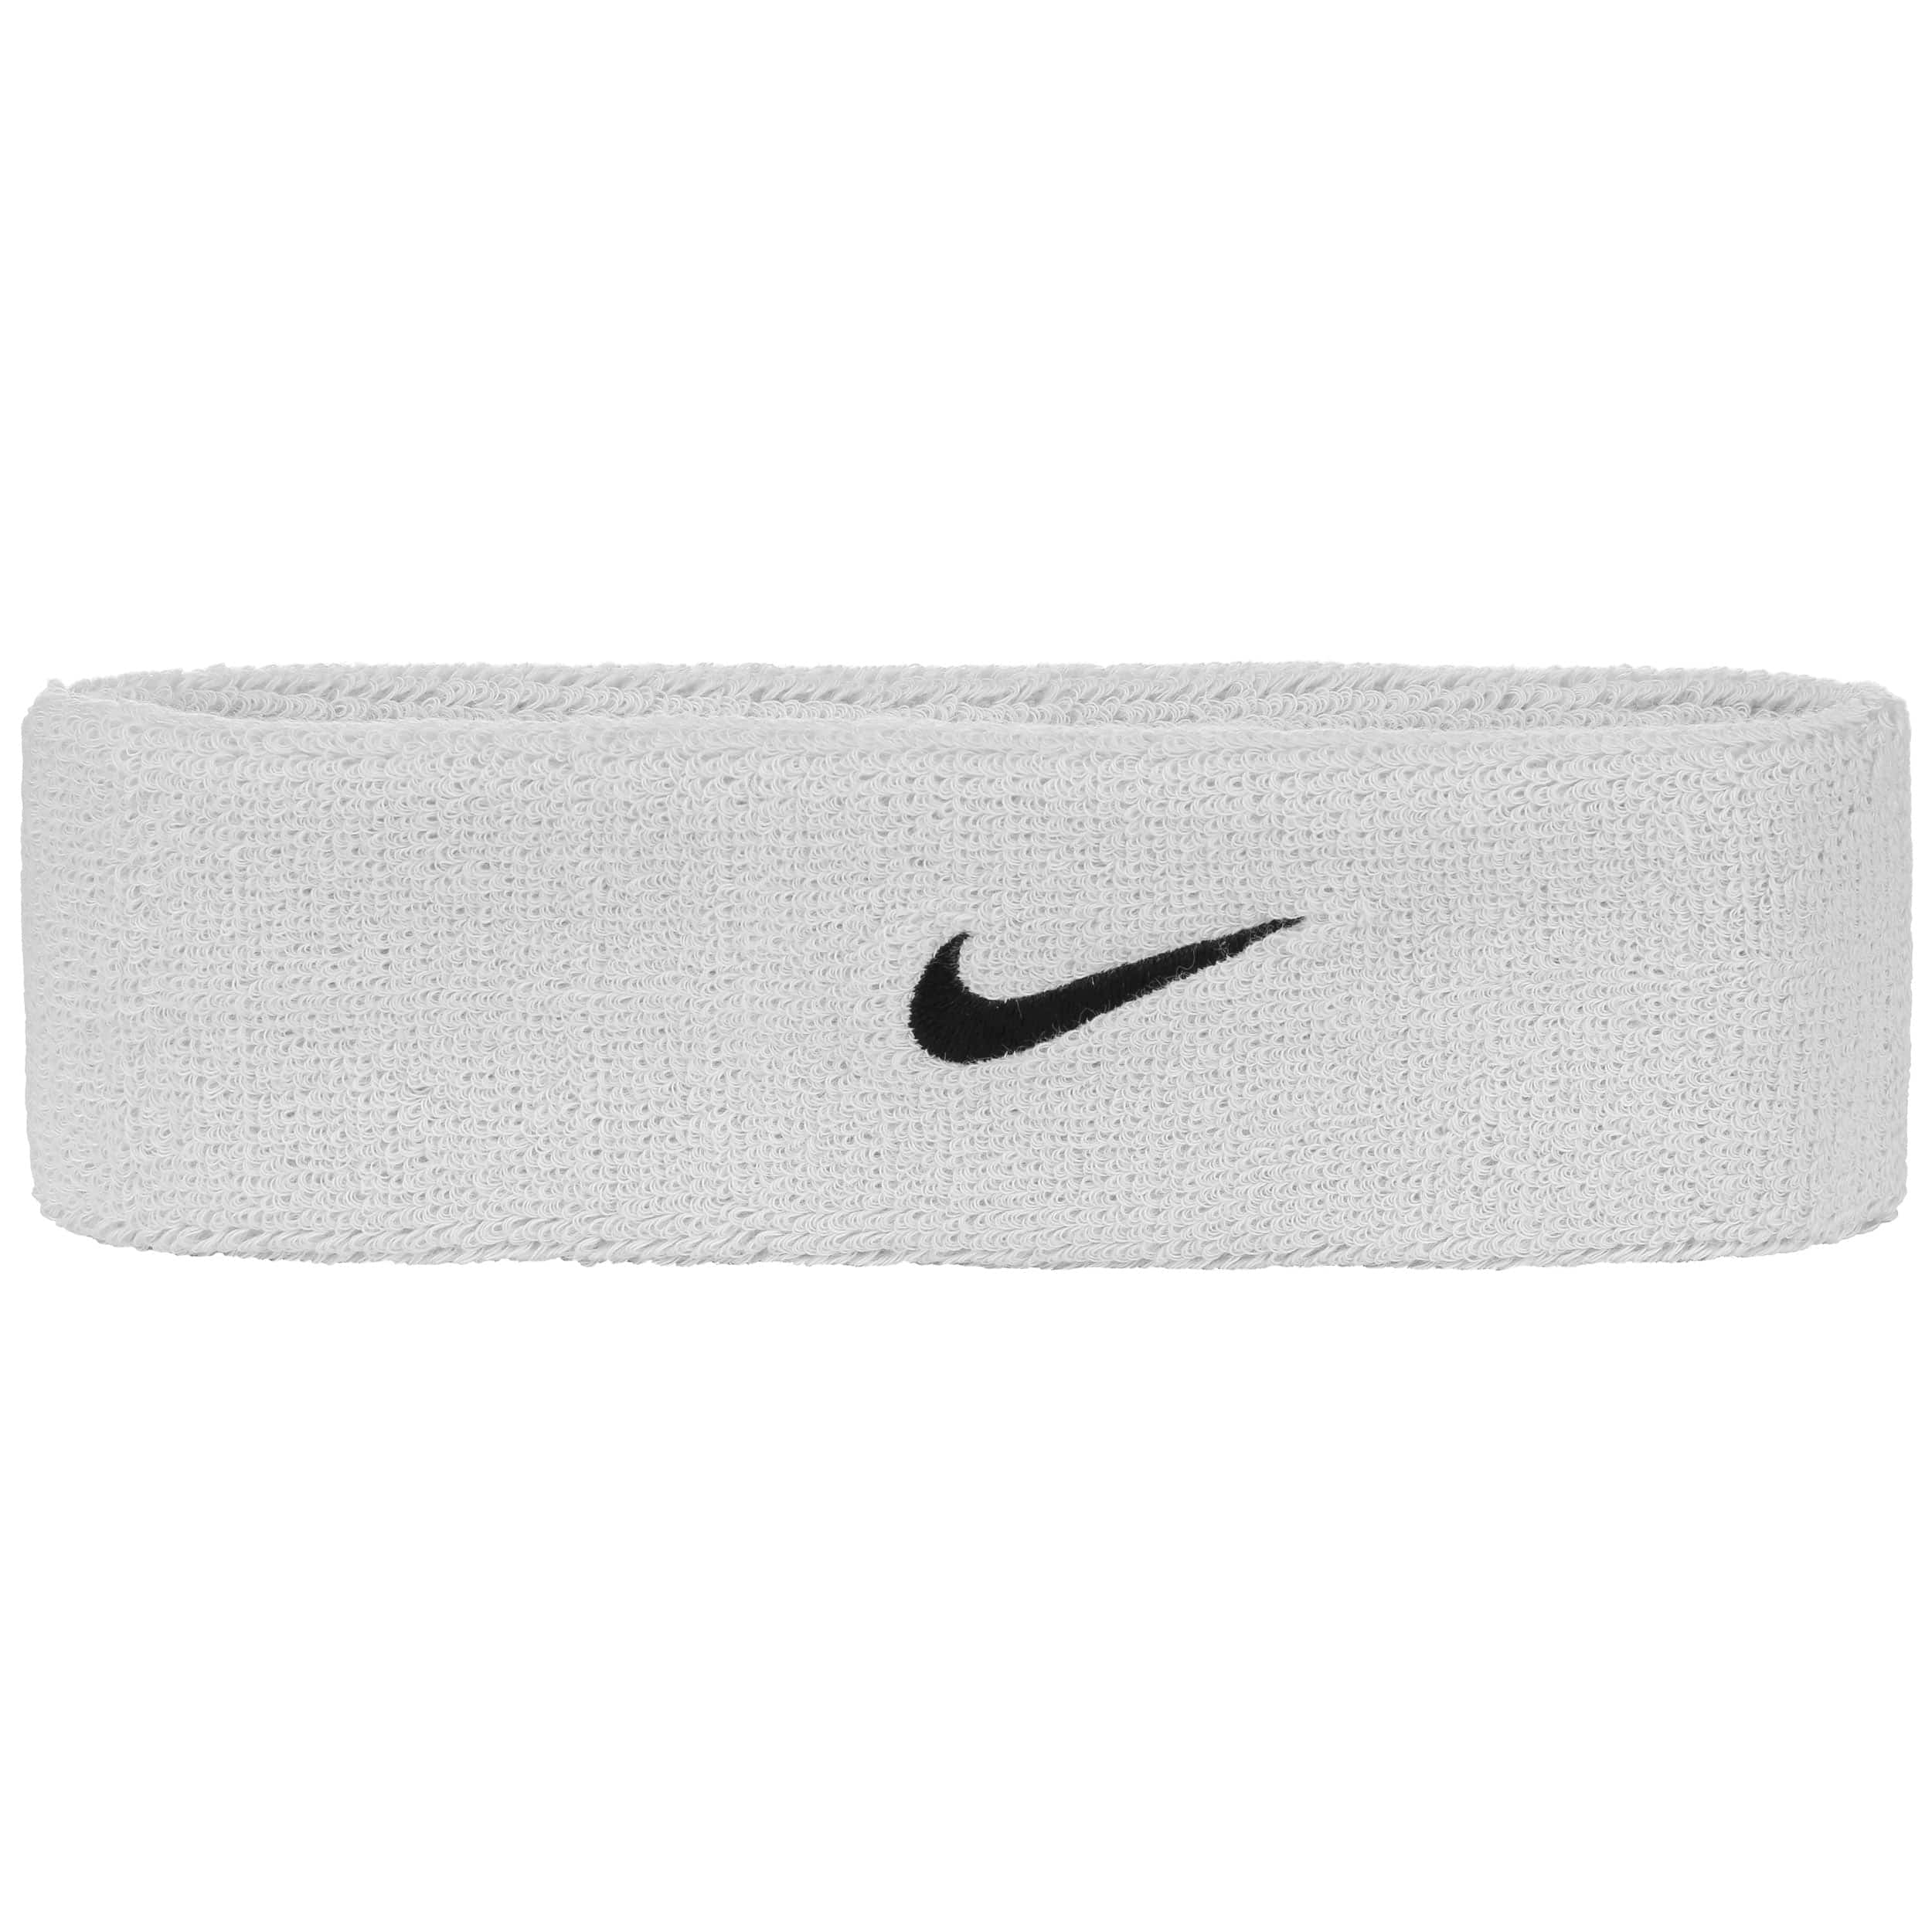 Резинка найк. Nike Swoosh Headband. Повязка Nike Swoosh. Nike Swoosh Headband White. Nike Swoosh Headband Black.